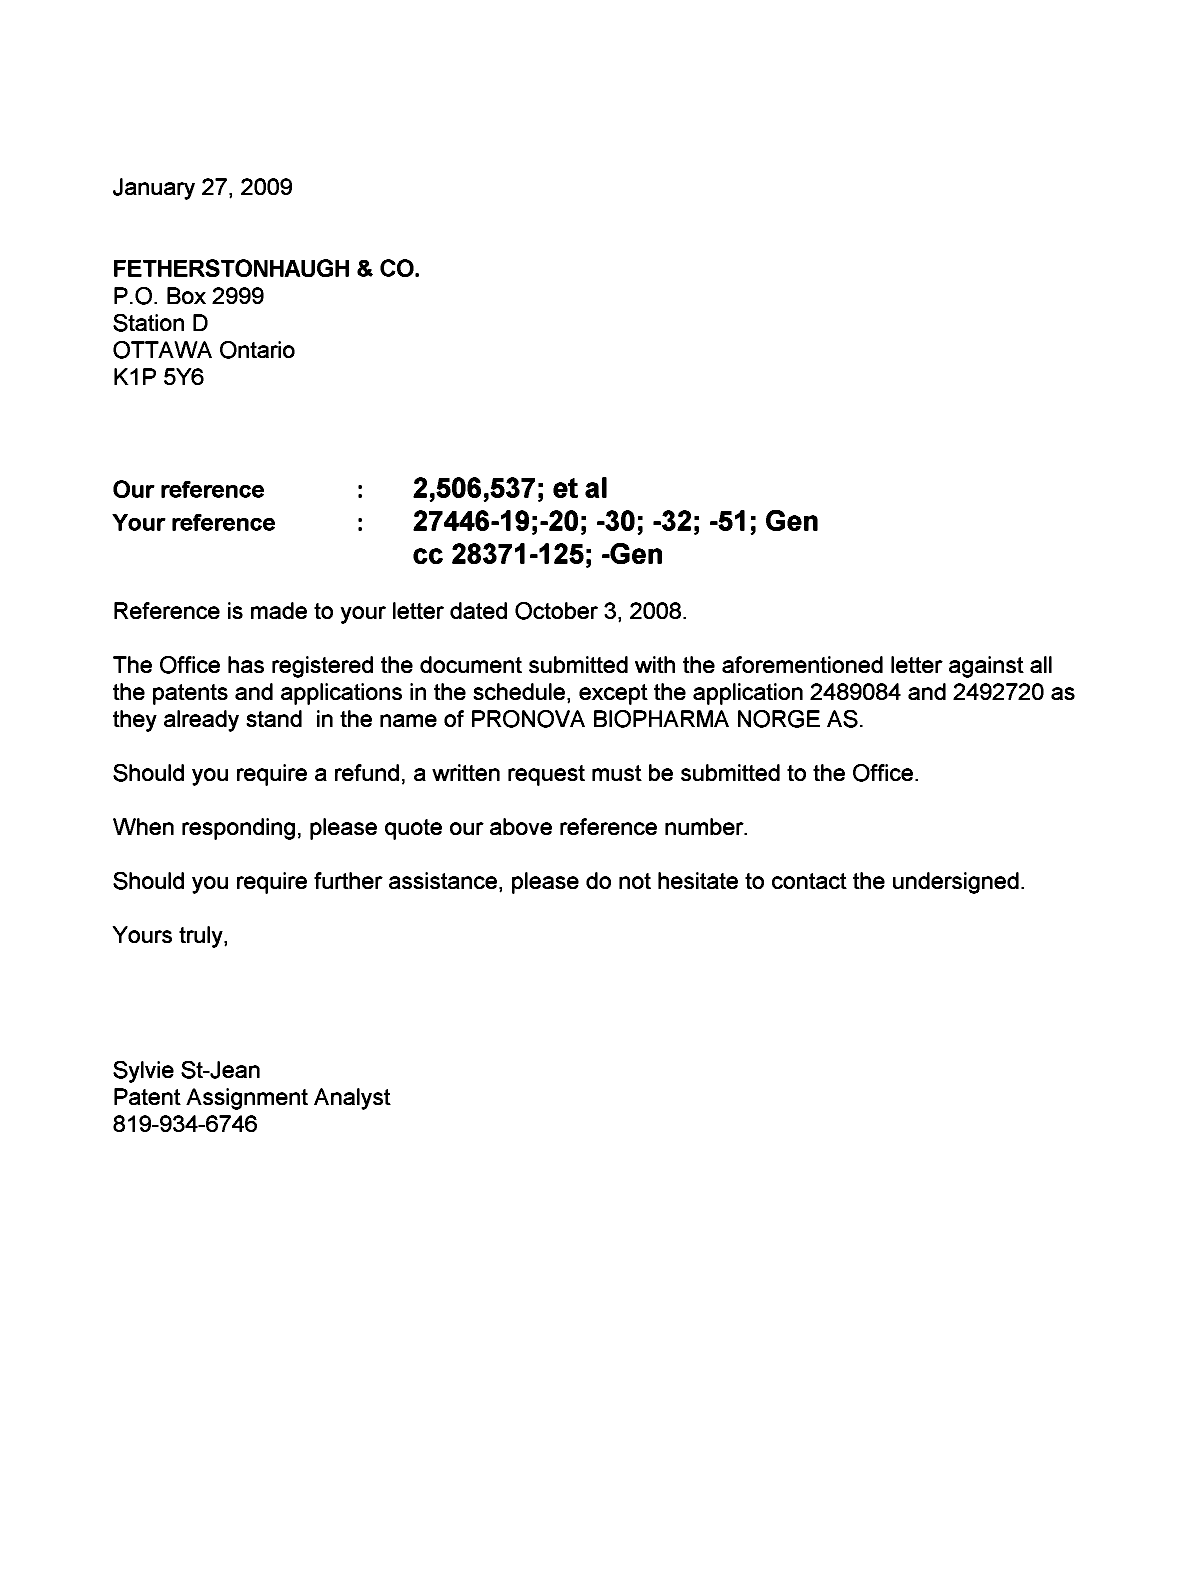 Canadian Patent Document 2362212. Correspondence 20090127. Image 1 of 1